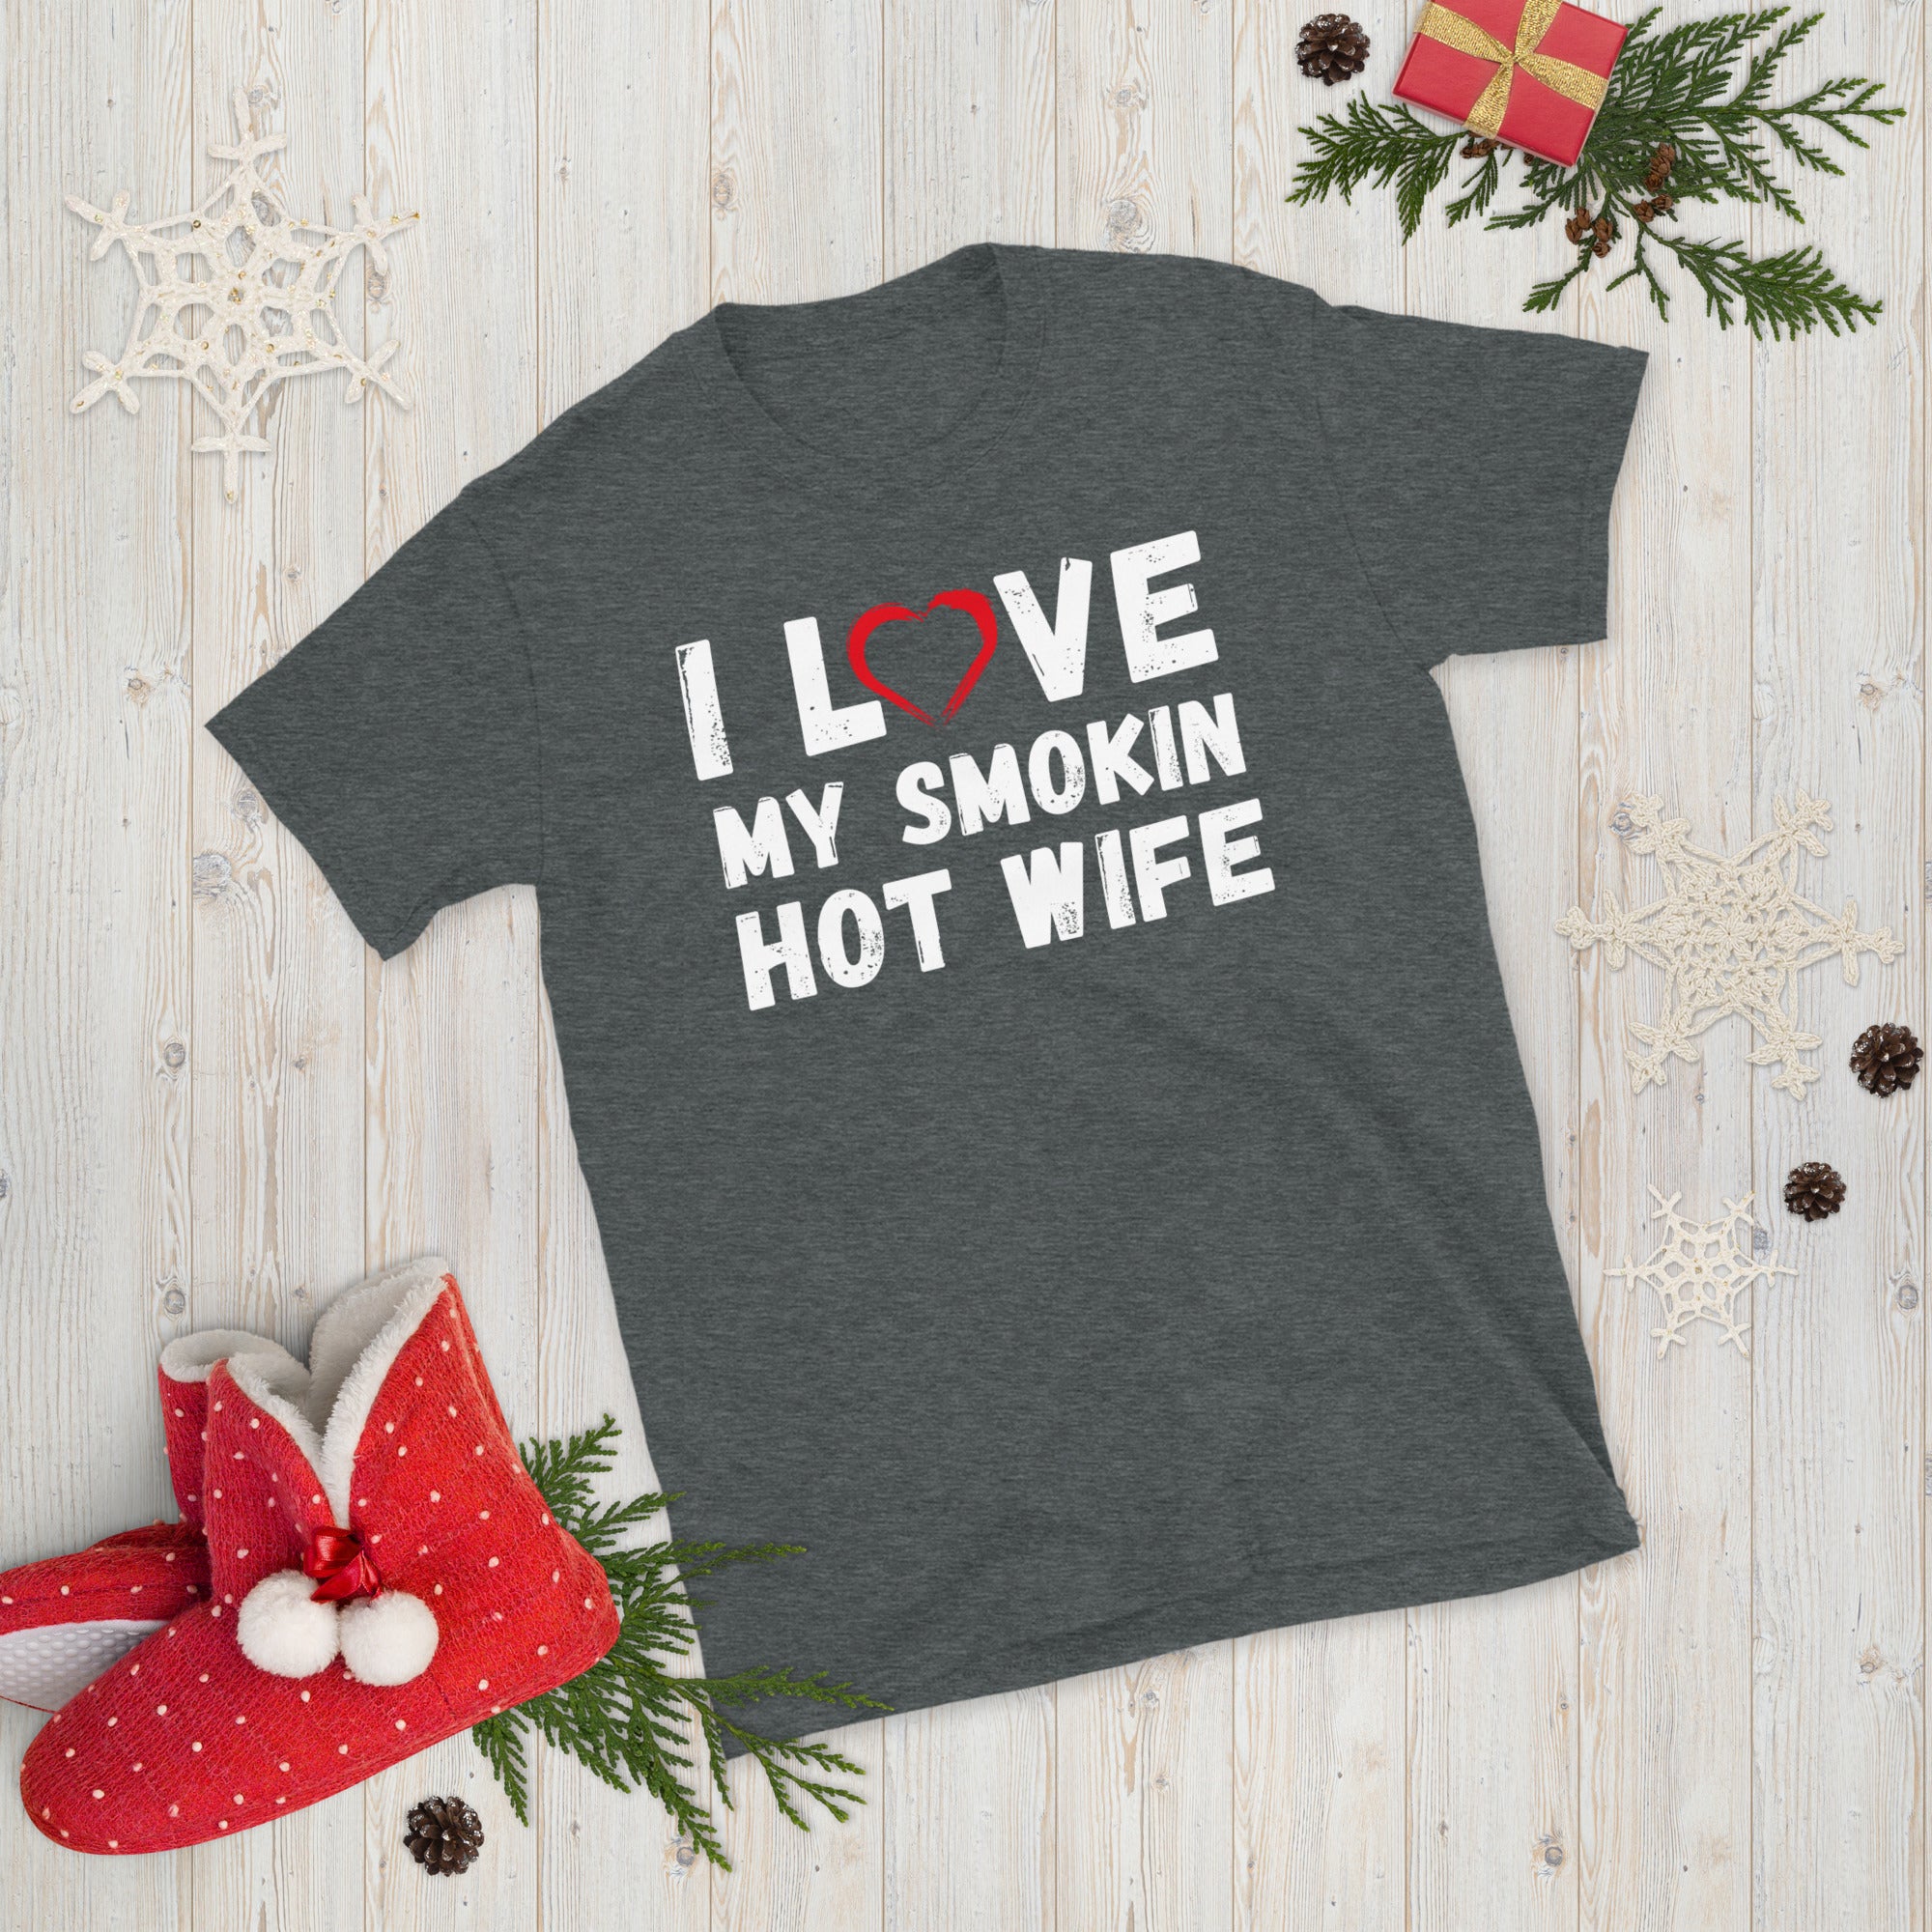 Wedding Gift, Anniversary Shirt, I Love My Smokin Hot Wife, I Love My Wife Shirt, Funny Husband Tshirt, Husband Gift, Fiance Shirt - Madeinsea©